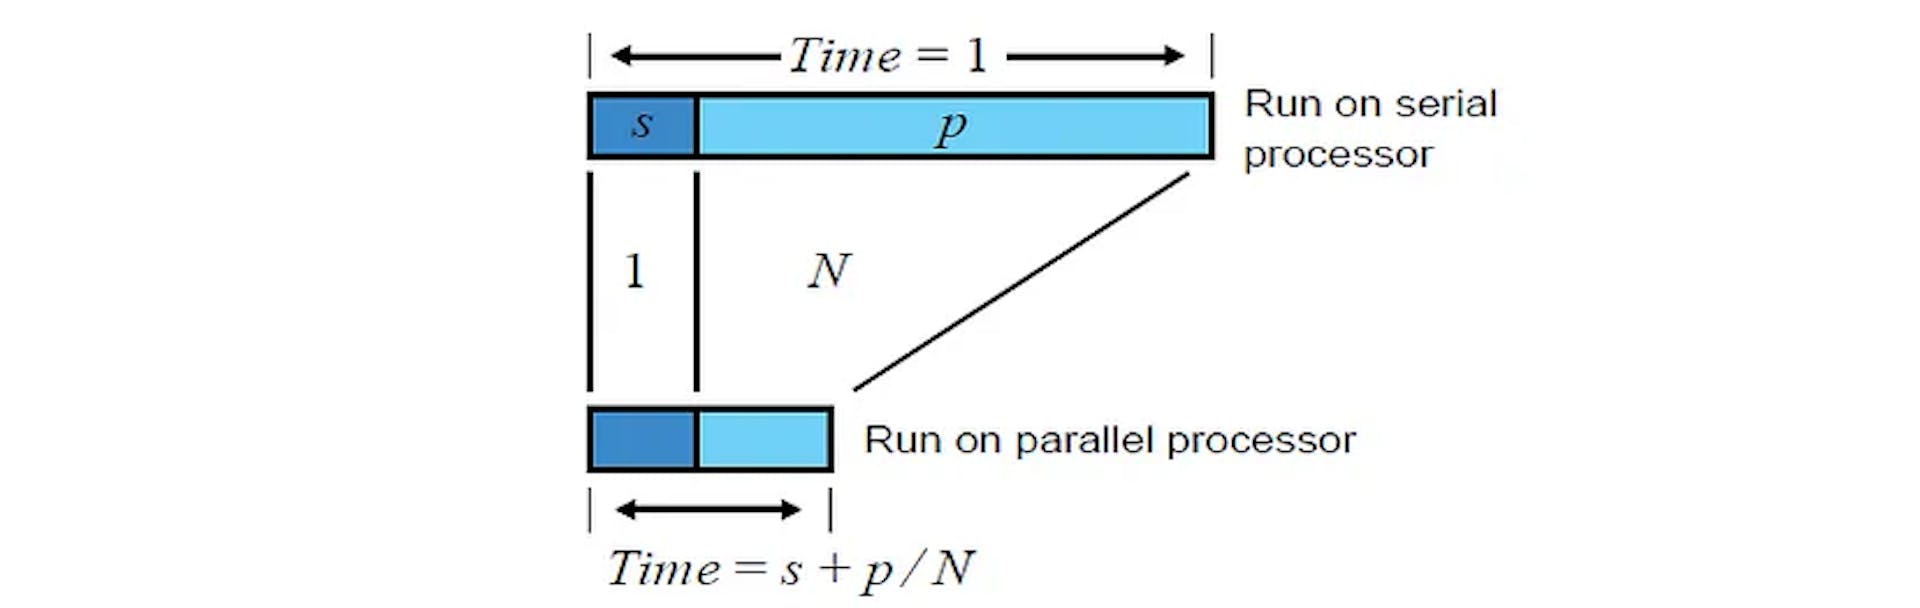 Modelo de tamanho fixo (Lei de Amdahl) [2]